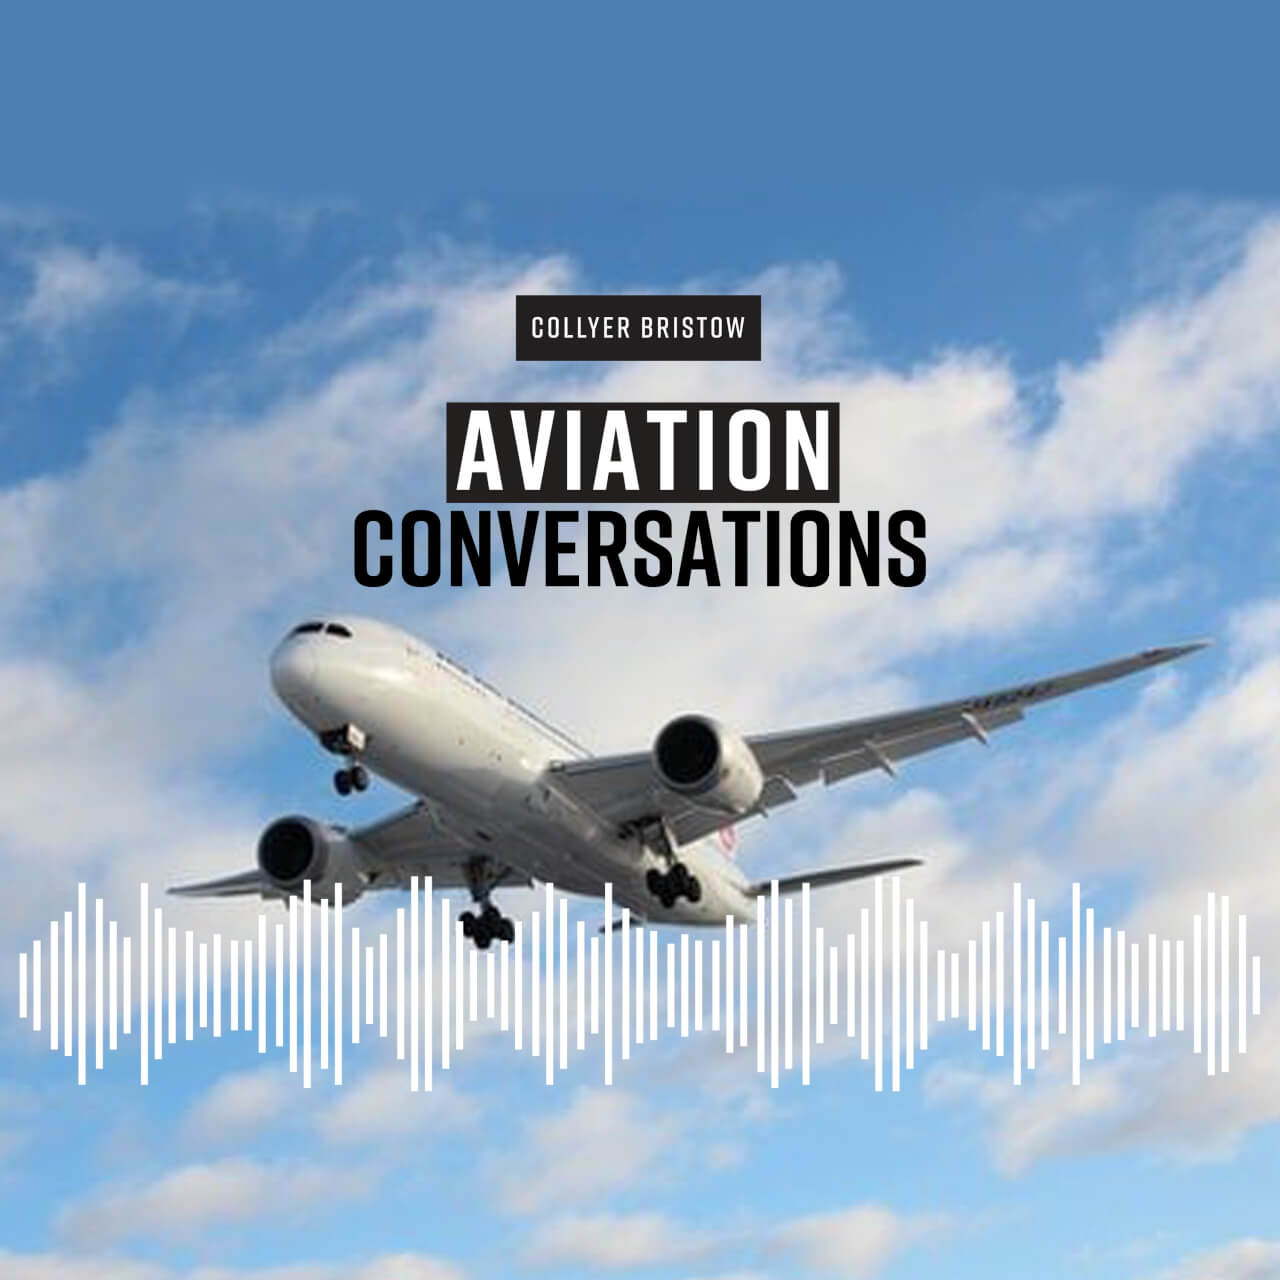 Aviation conversations flyer